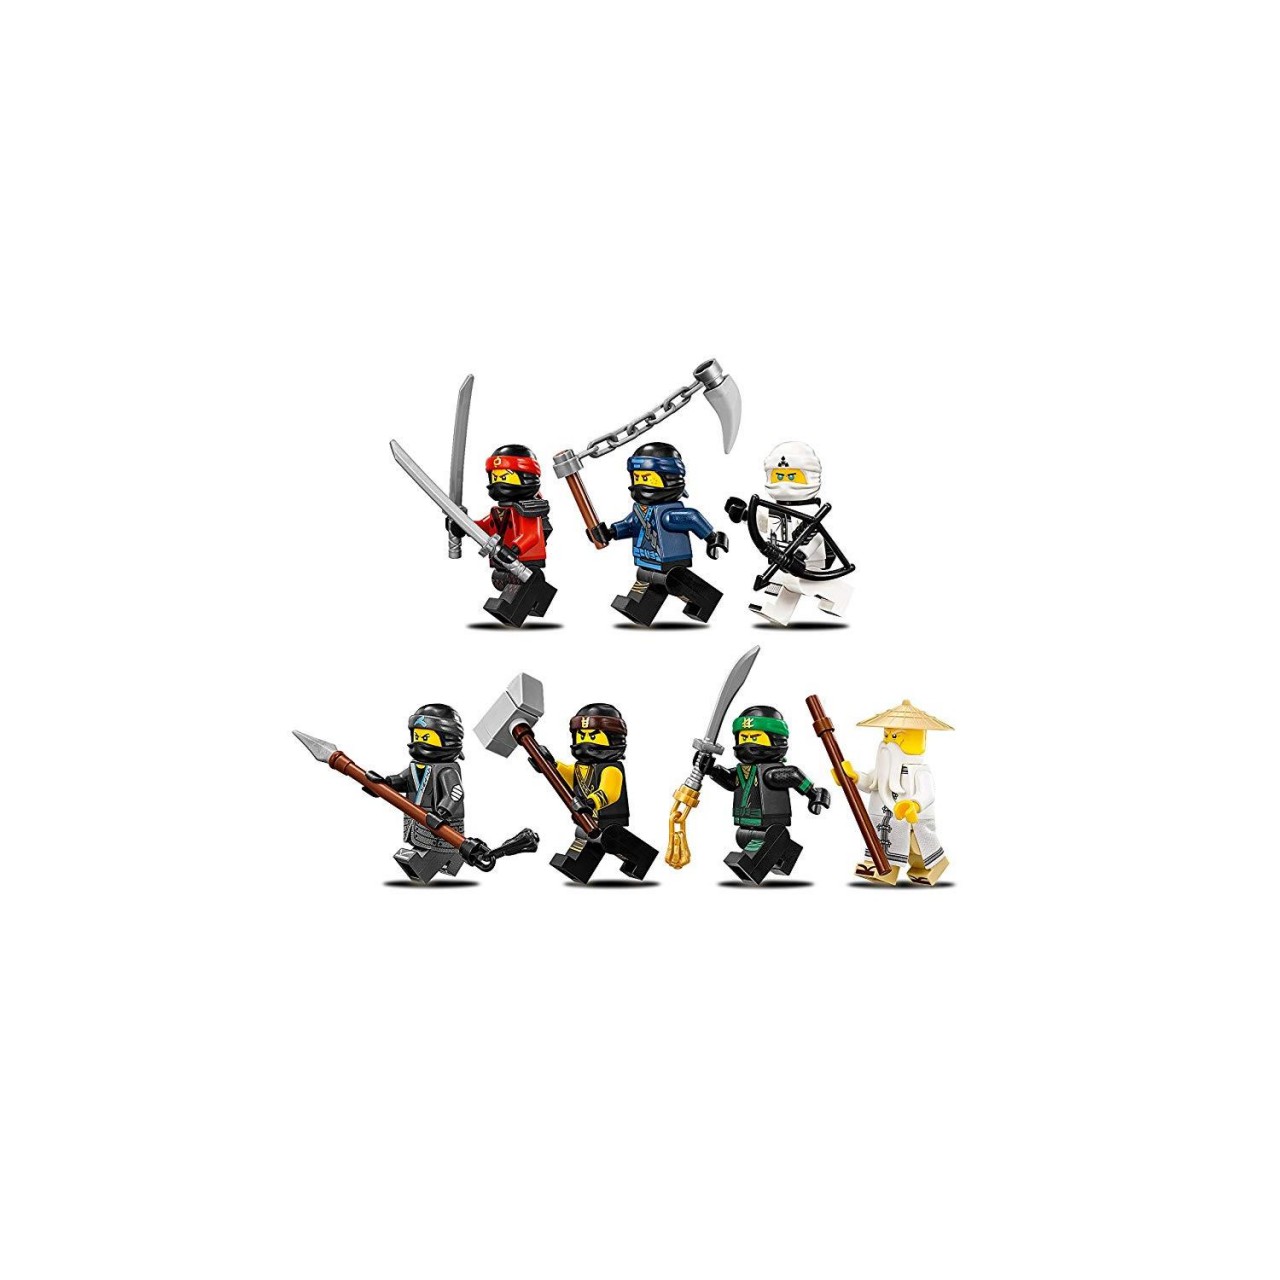 LEGO NINJAGO 70618 Ninja-Flugsegler